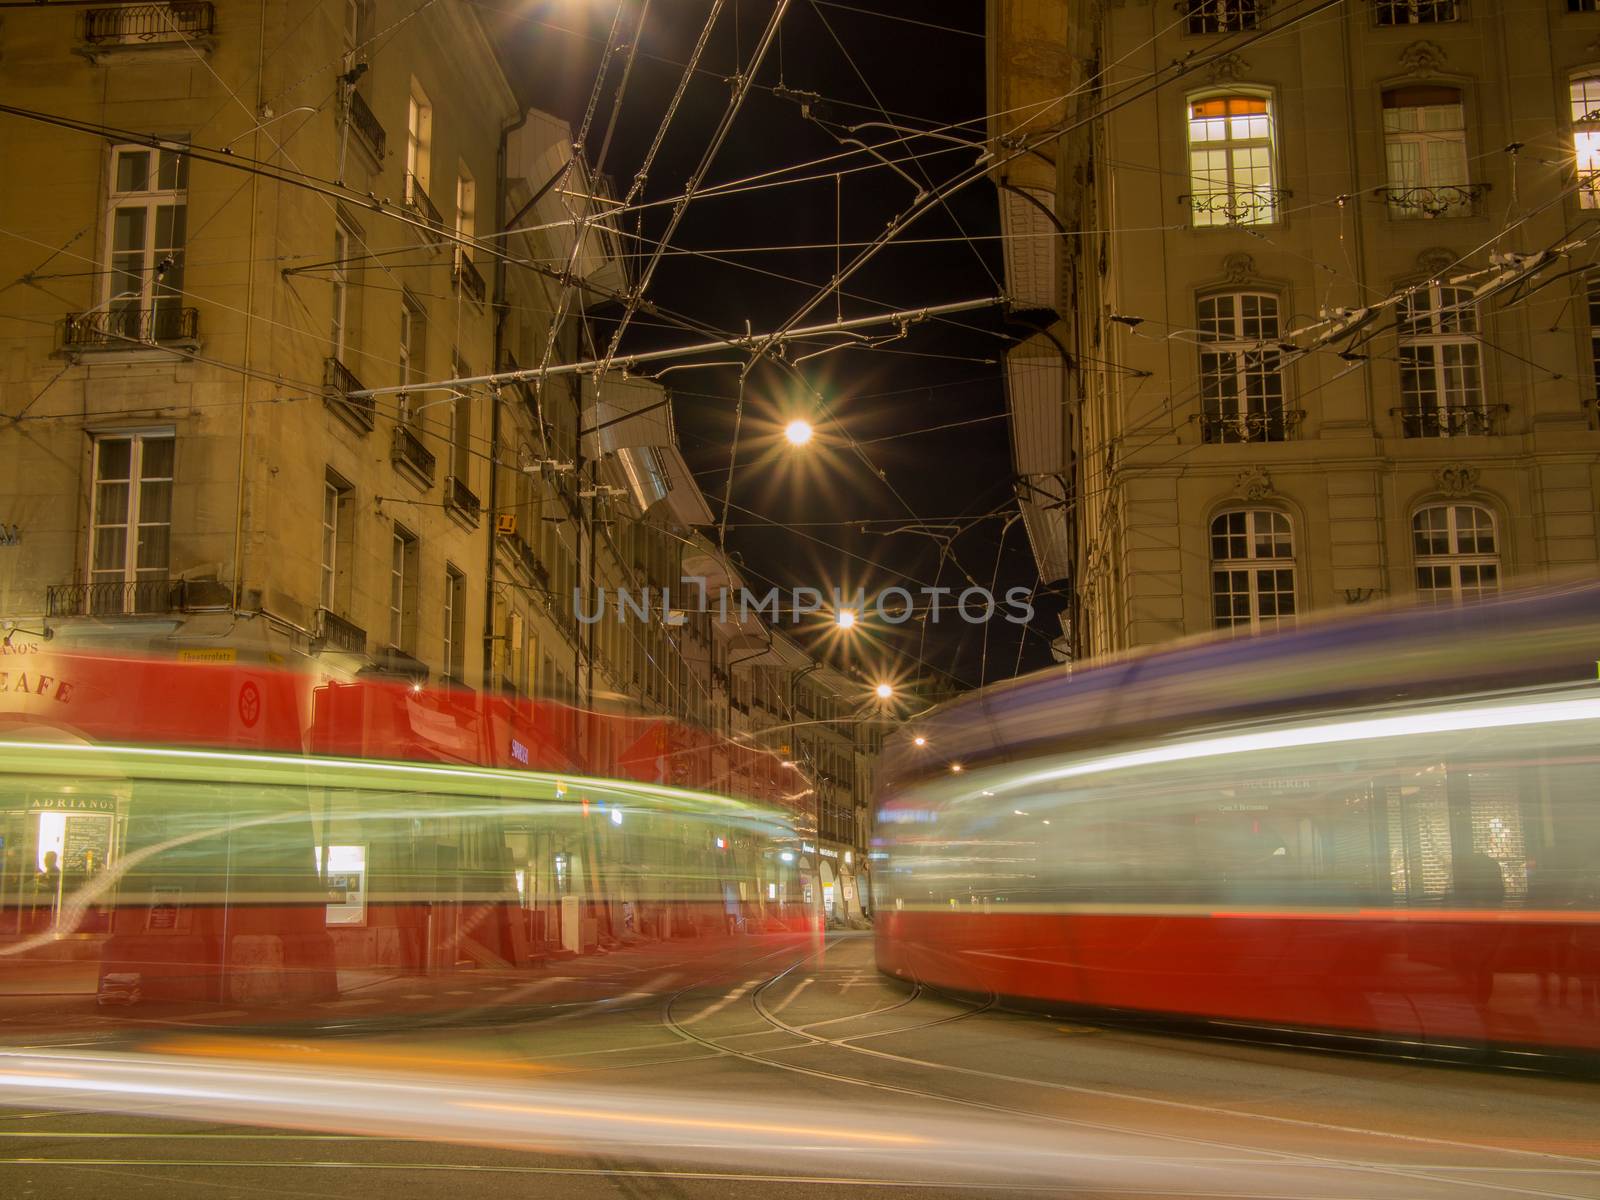 Night trams in streets by danieldep